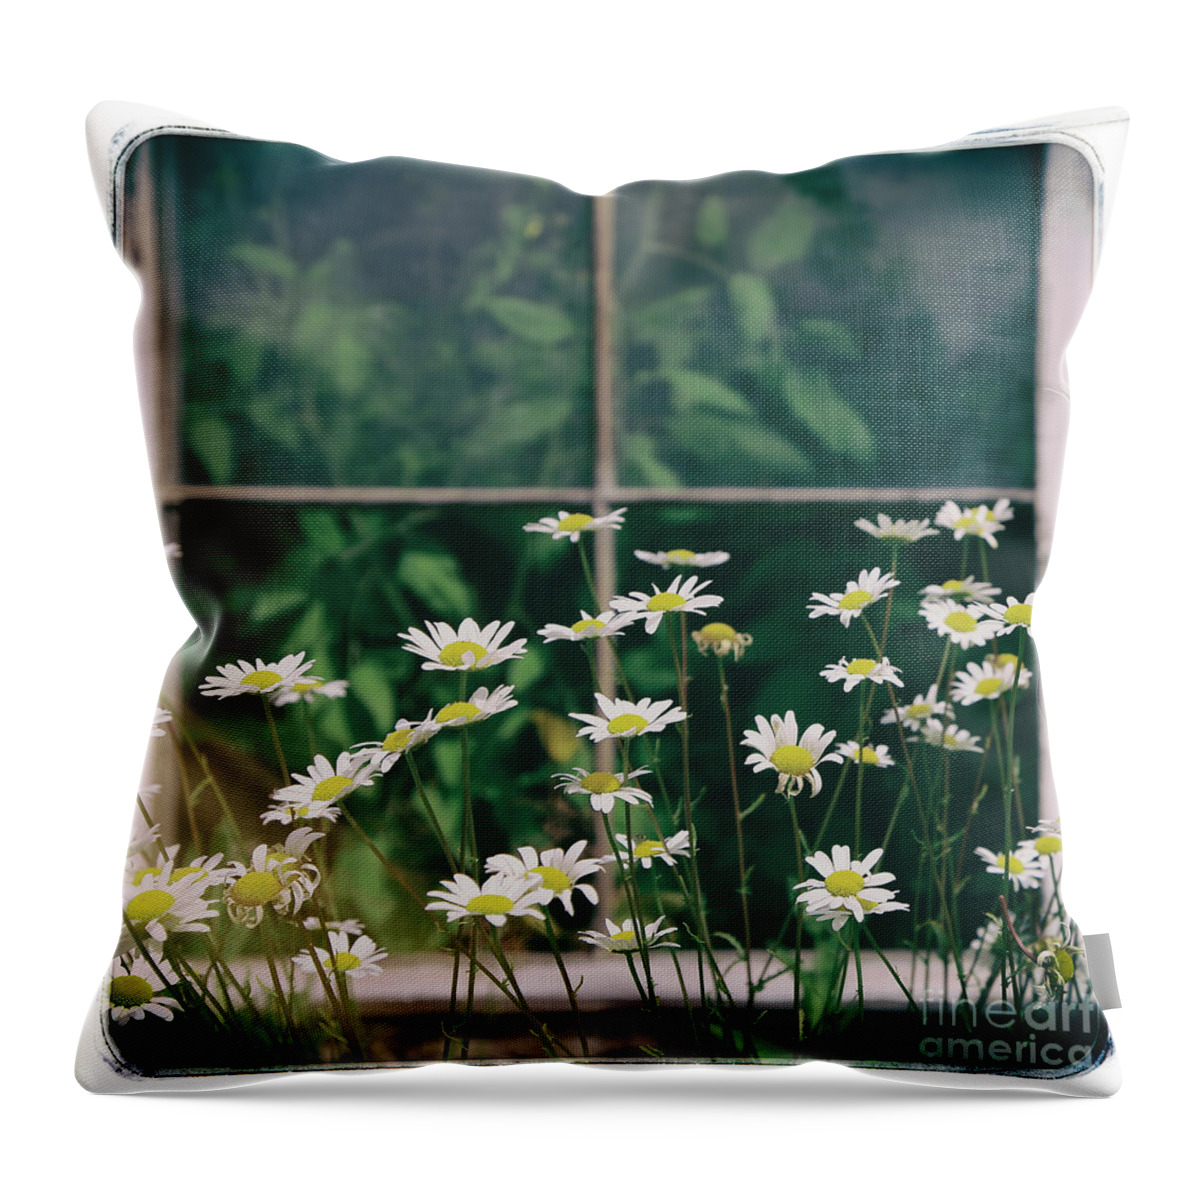 Kate Mckenna Throw Pillow featuring the photograph Wild Daisies by Kate McKenna